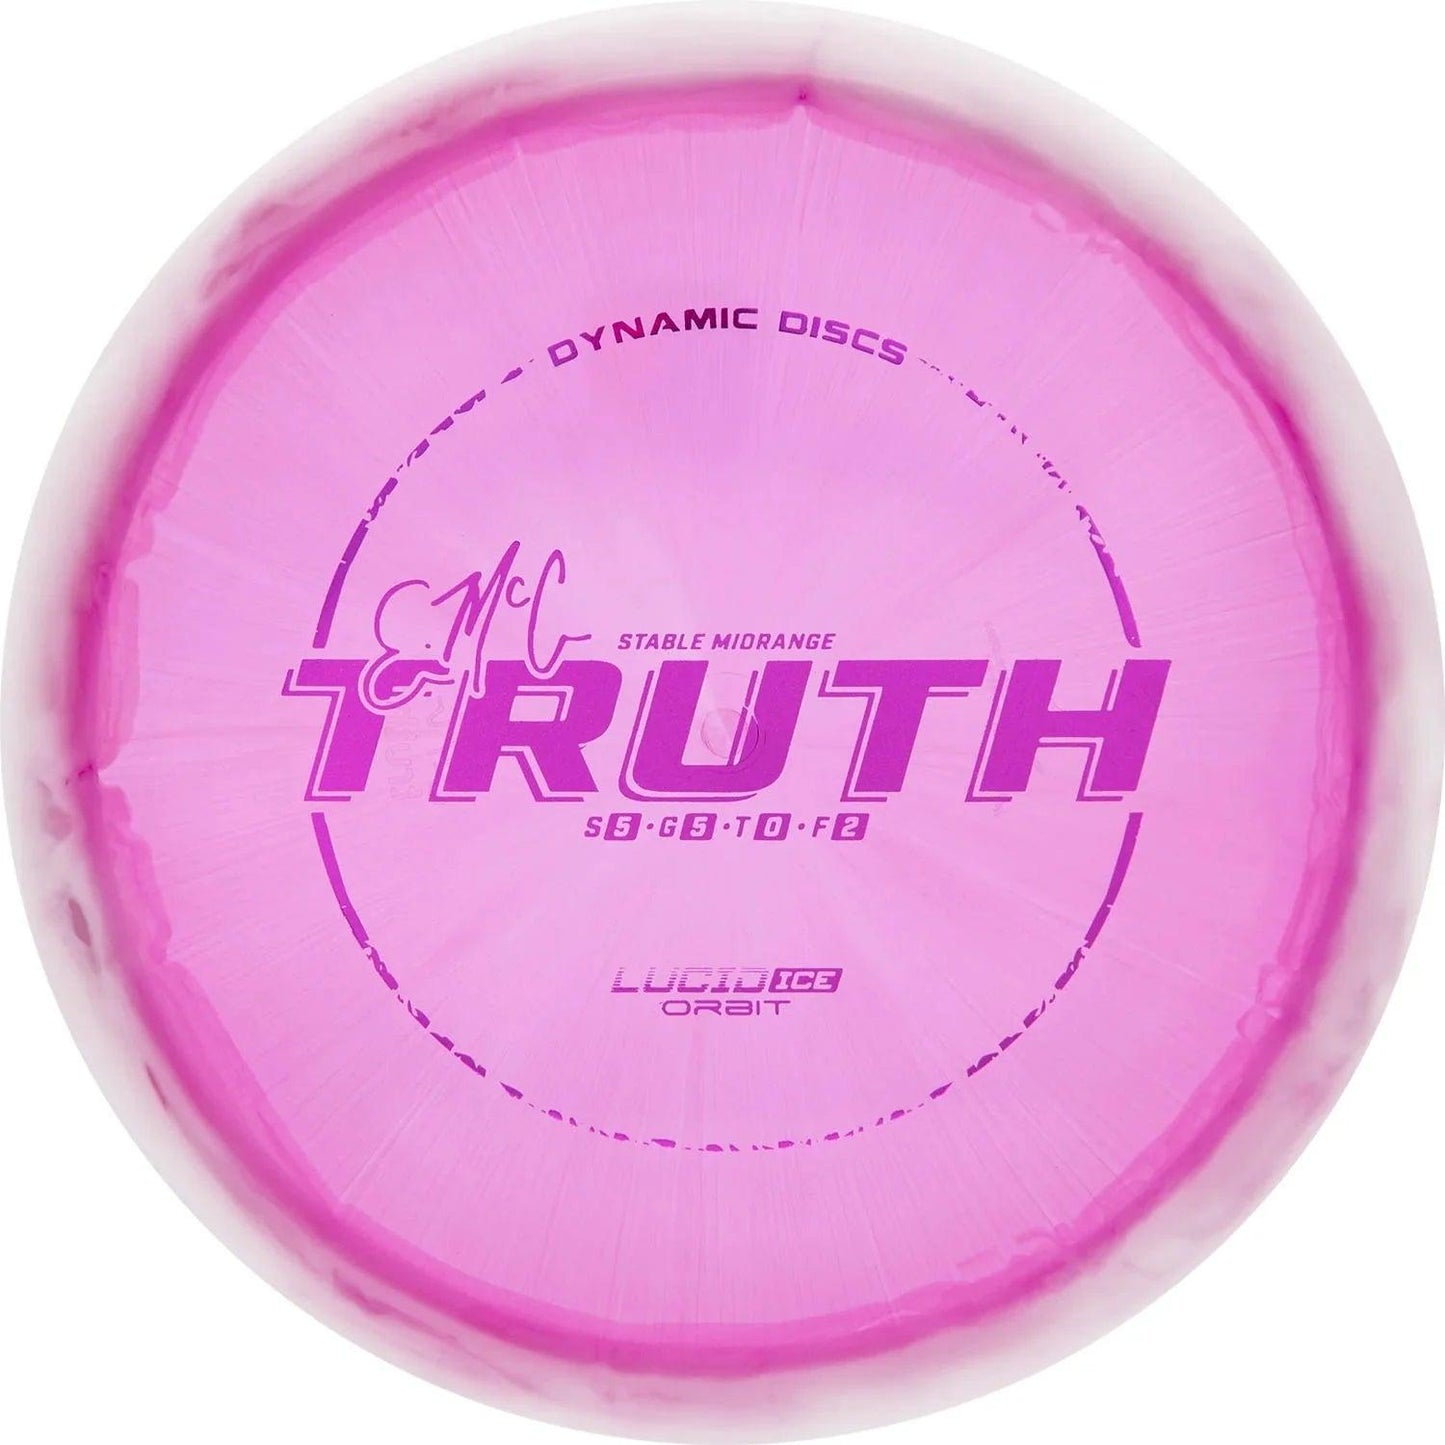 Dynamic Discs Lucid Ice Orbit EMAC Truth - Disc Golf Deals USA